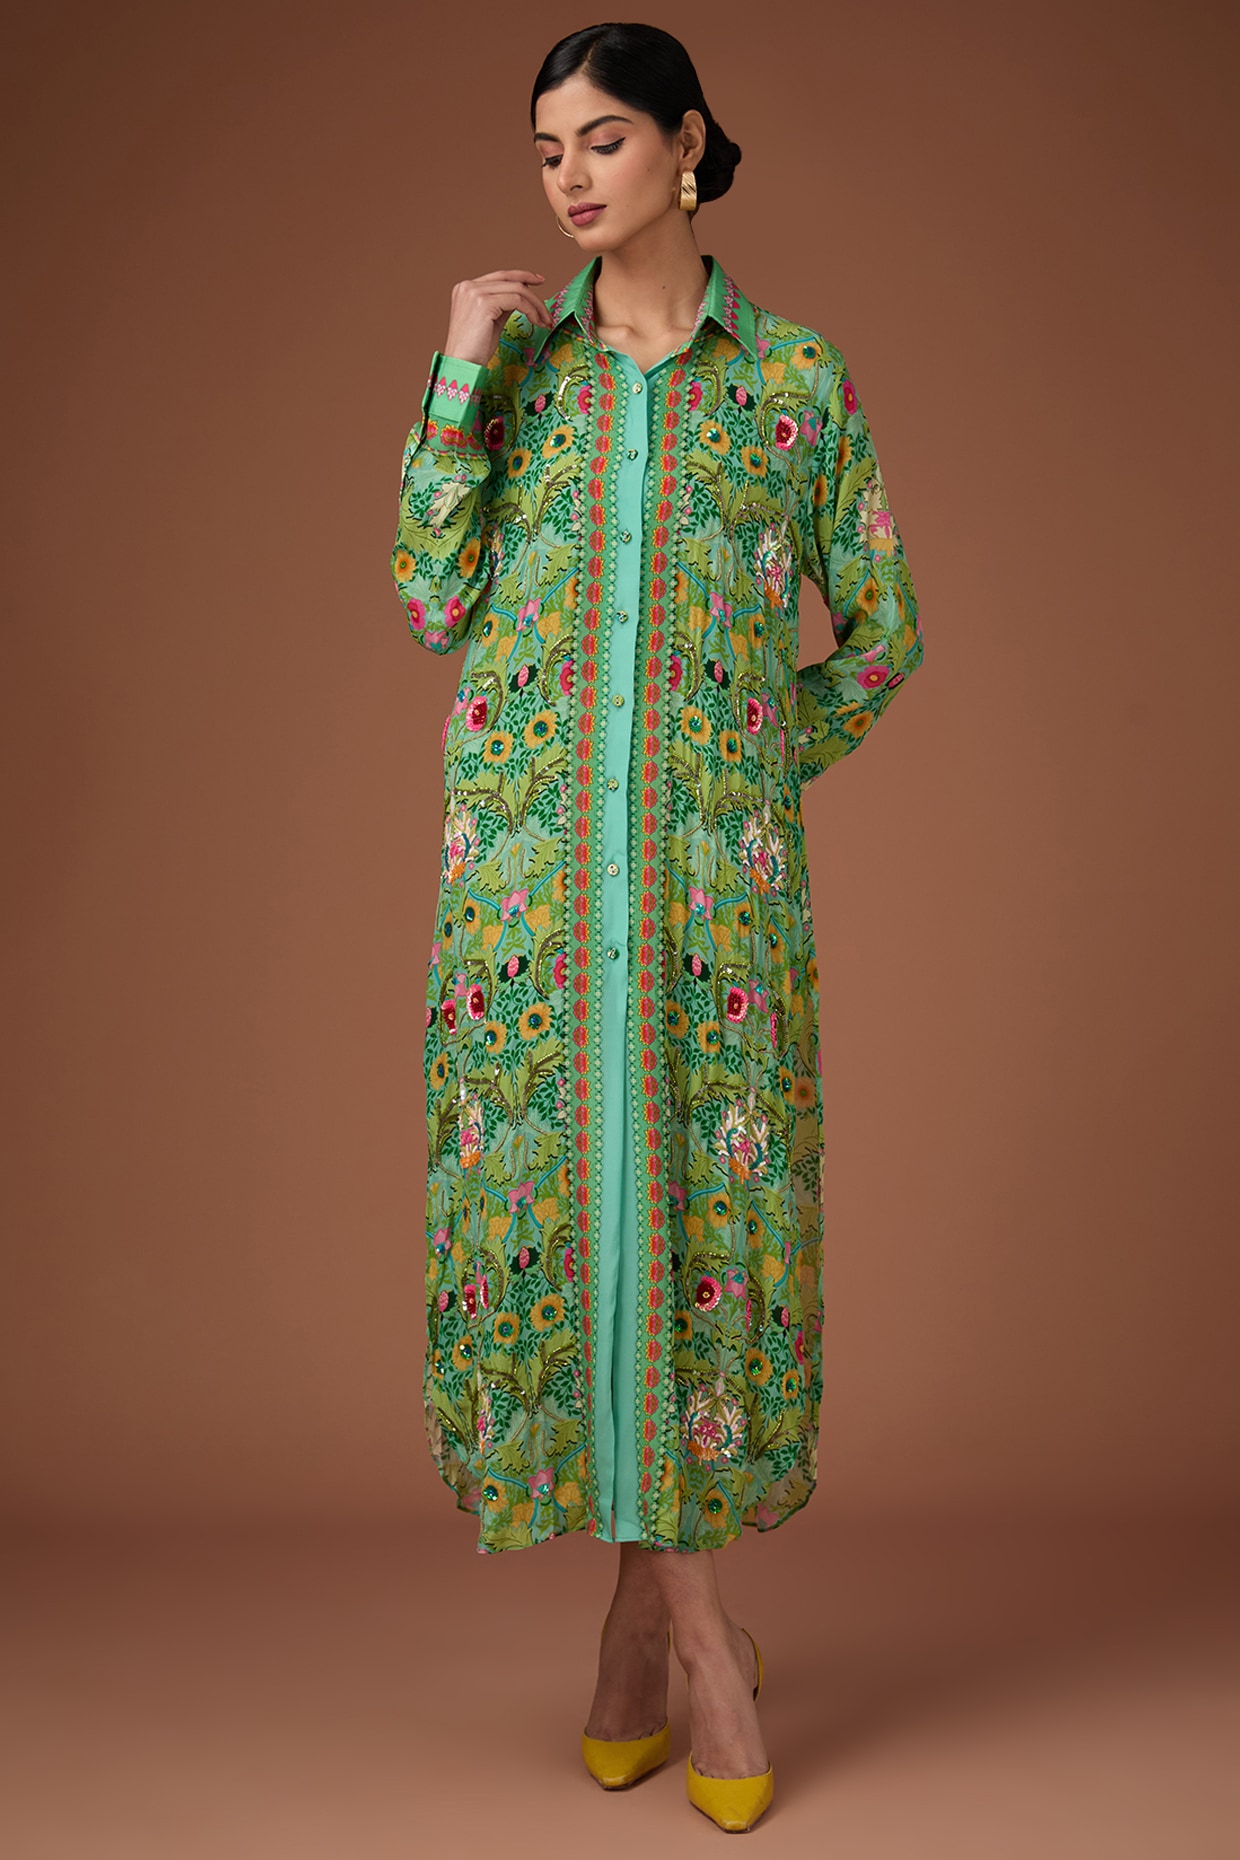 Buy Exotic Mauve Polyester Dresses Online at Inddus.com.